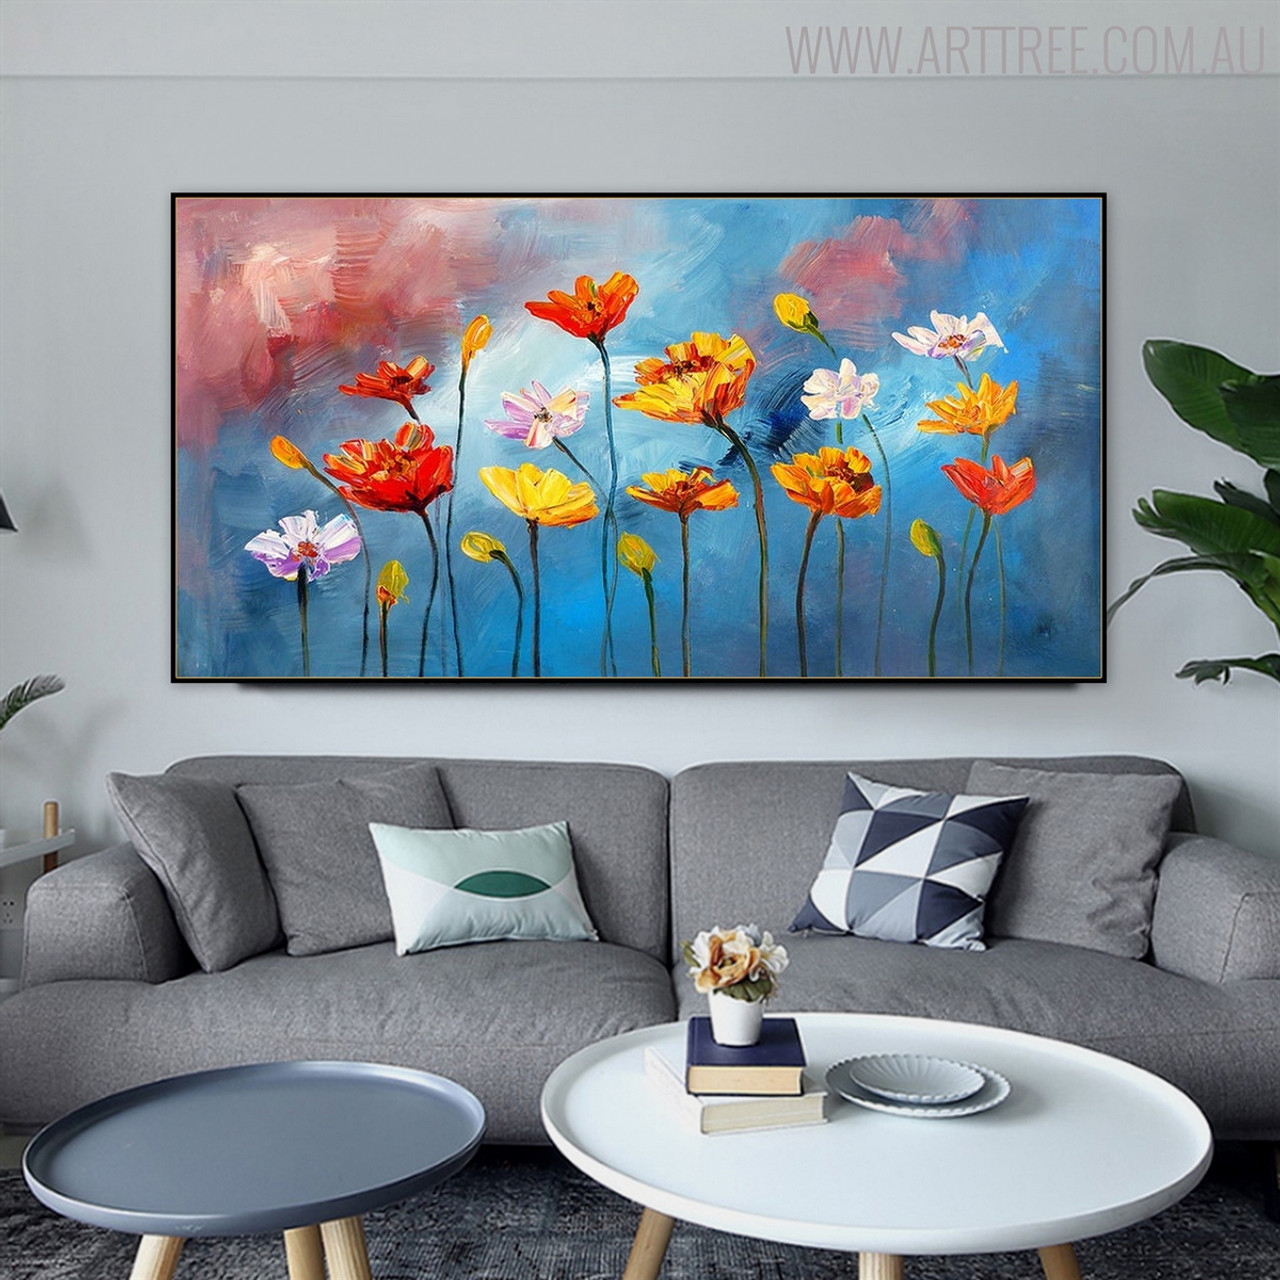 Chromatic Poppies - arttree.com.au